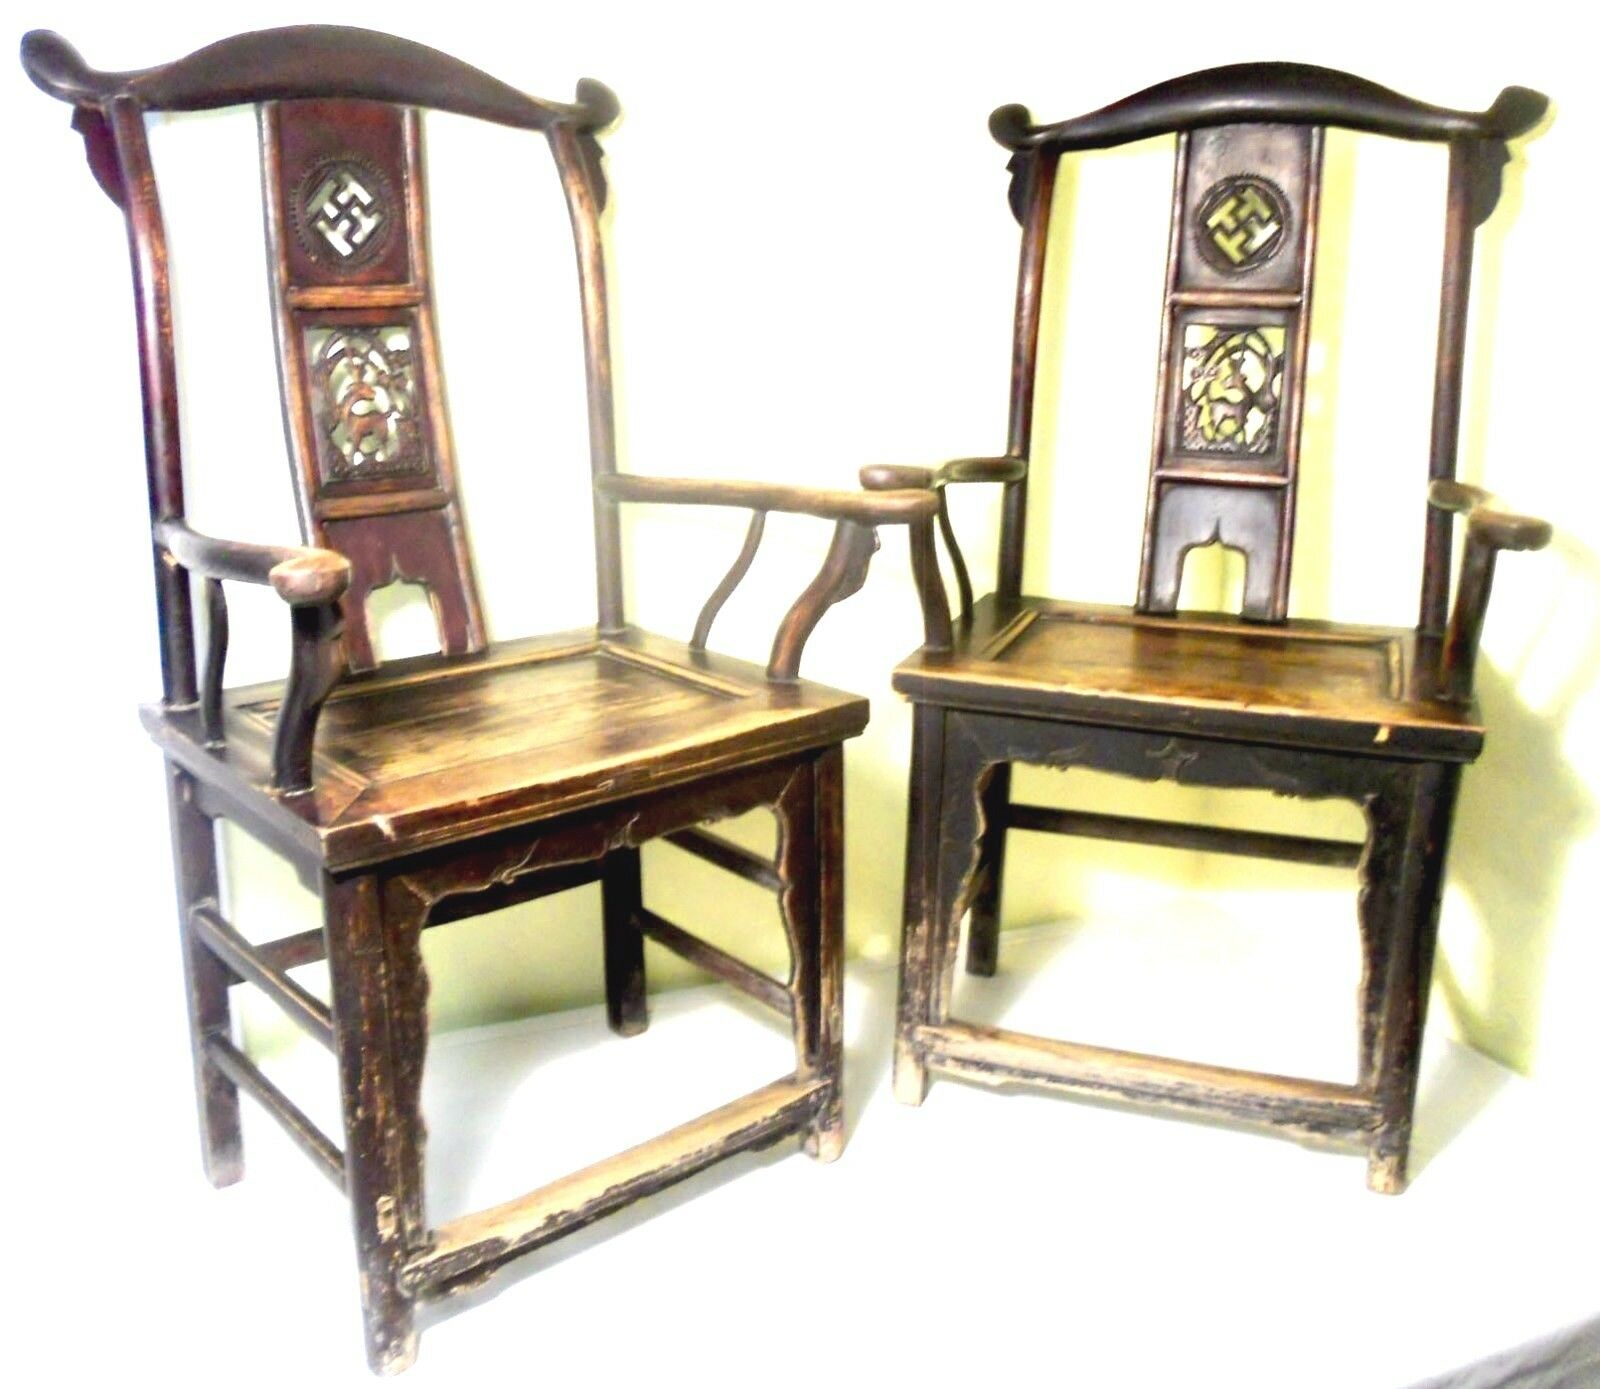 Antique Chinese High Back Arm Chairs (2629)(pair), Circa 1800-1849